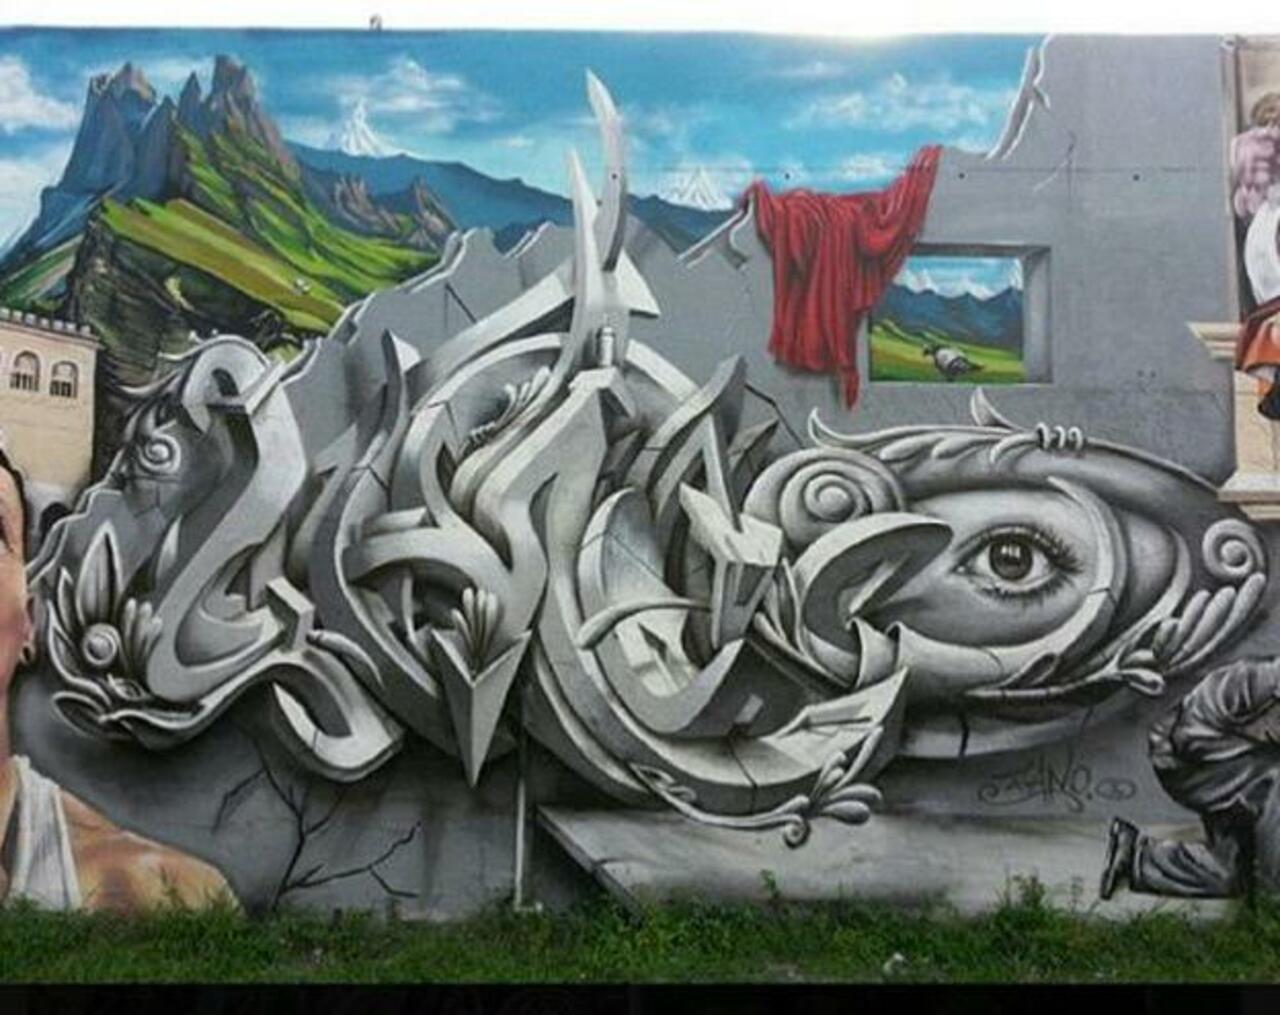 Street Art by Smog One

#art #mural #graffiti #streetart http://t.co/pED2QMSehw